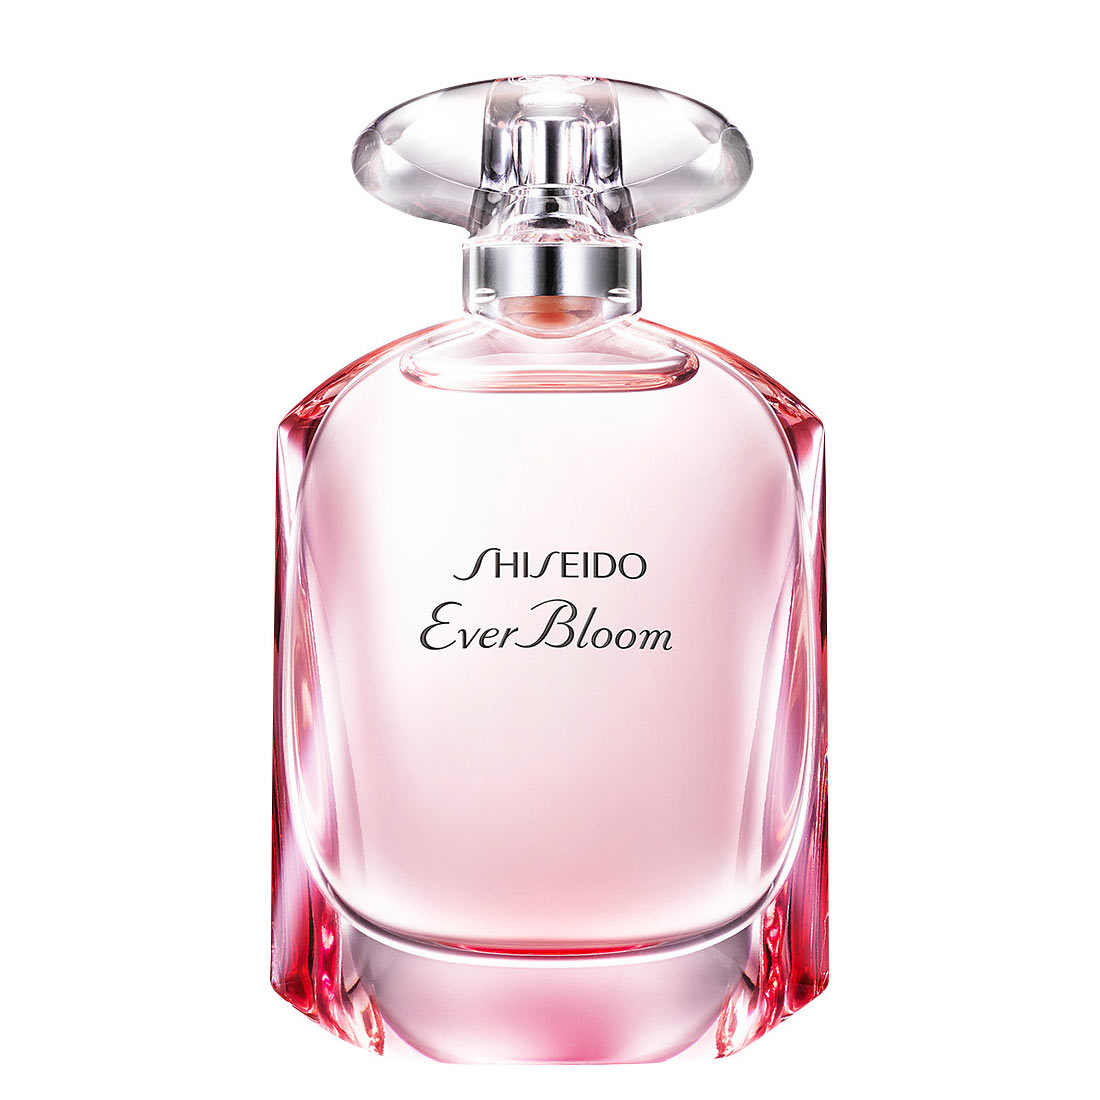 Ever Bloom Shiseido Image